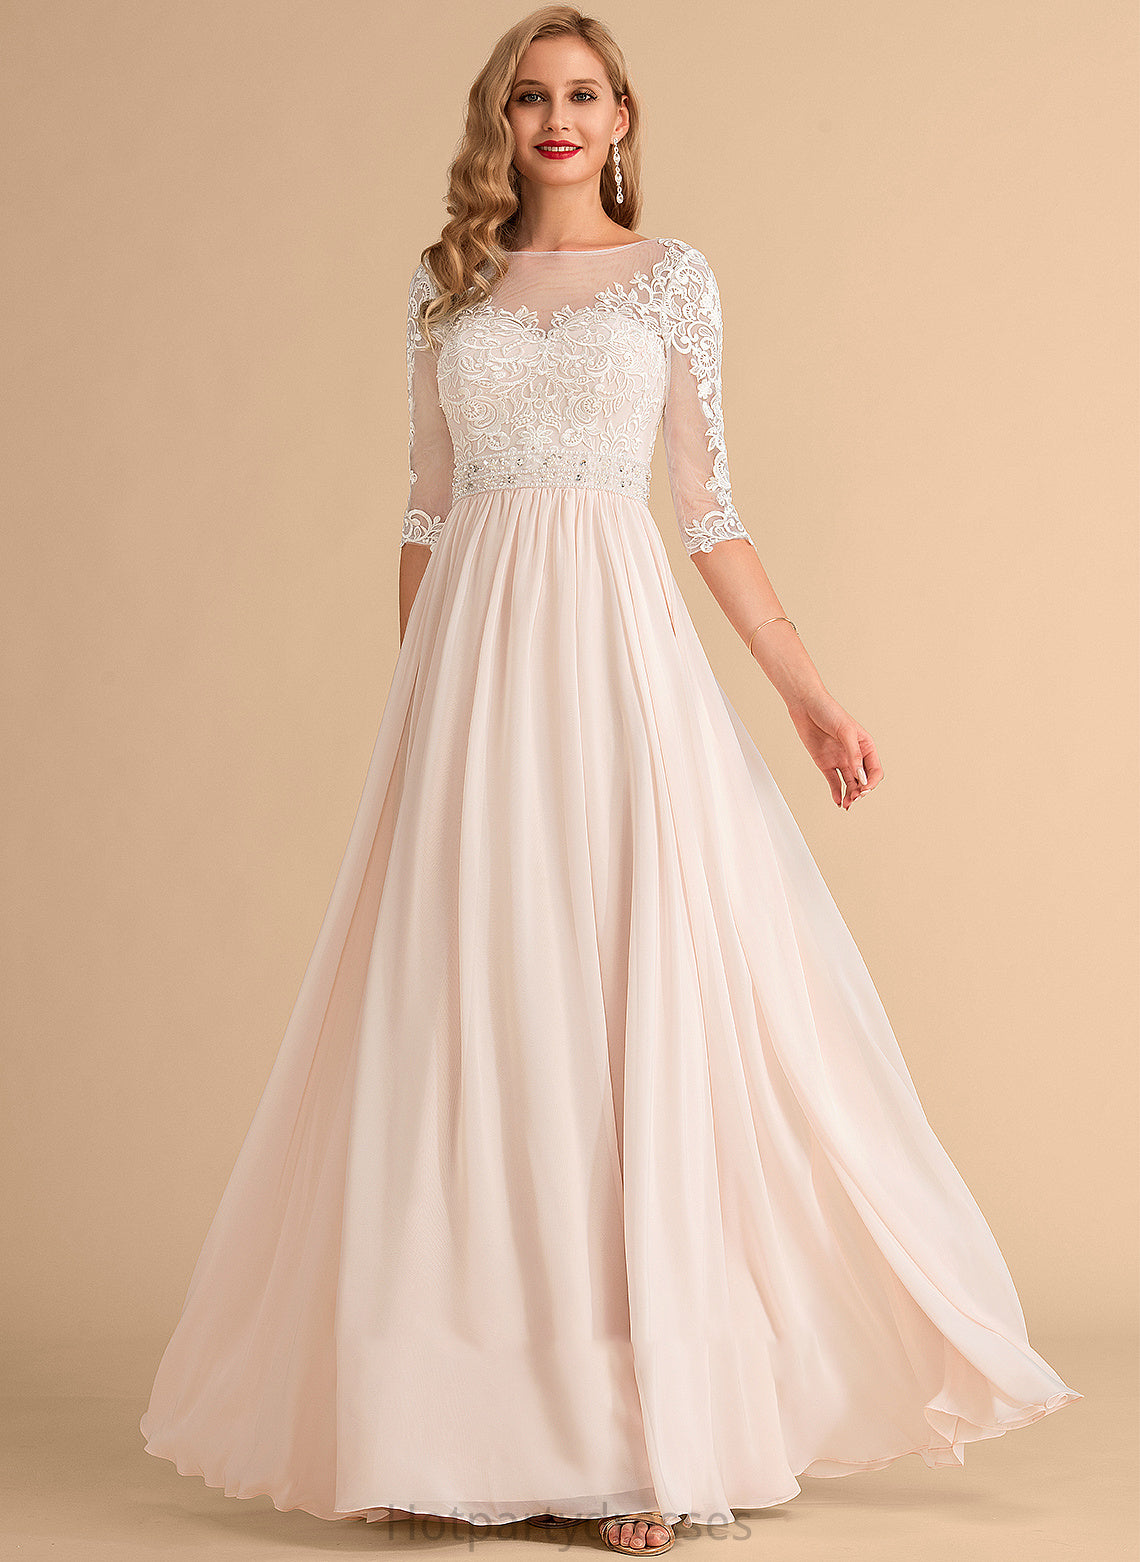 Lace Beading With Dress Floor-Length Wedding Wedding Dresses Illusion Sequins Novia Chiffon A-Line